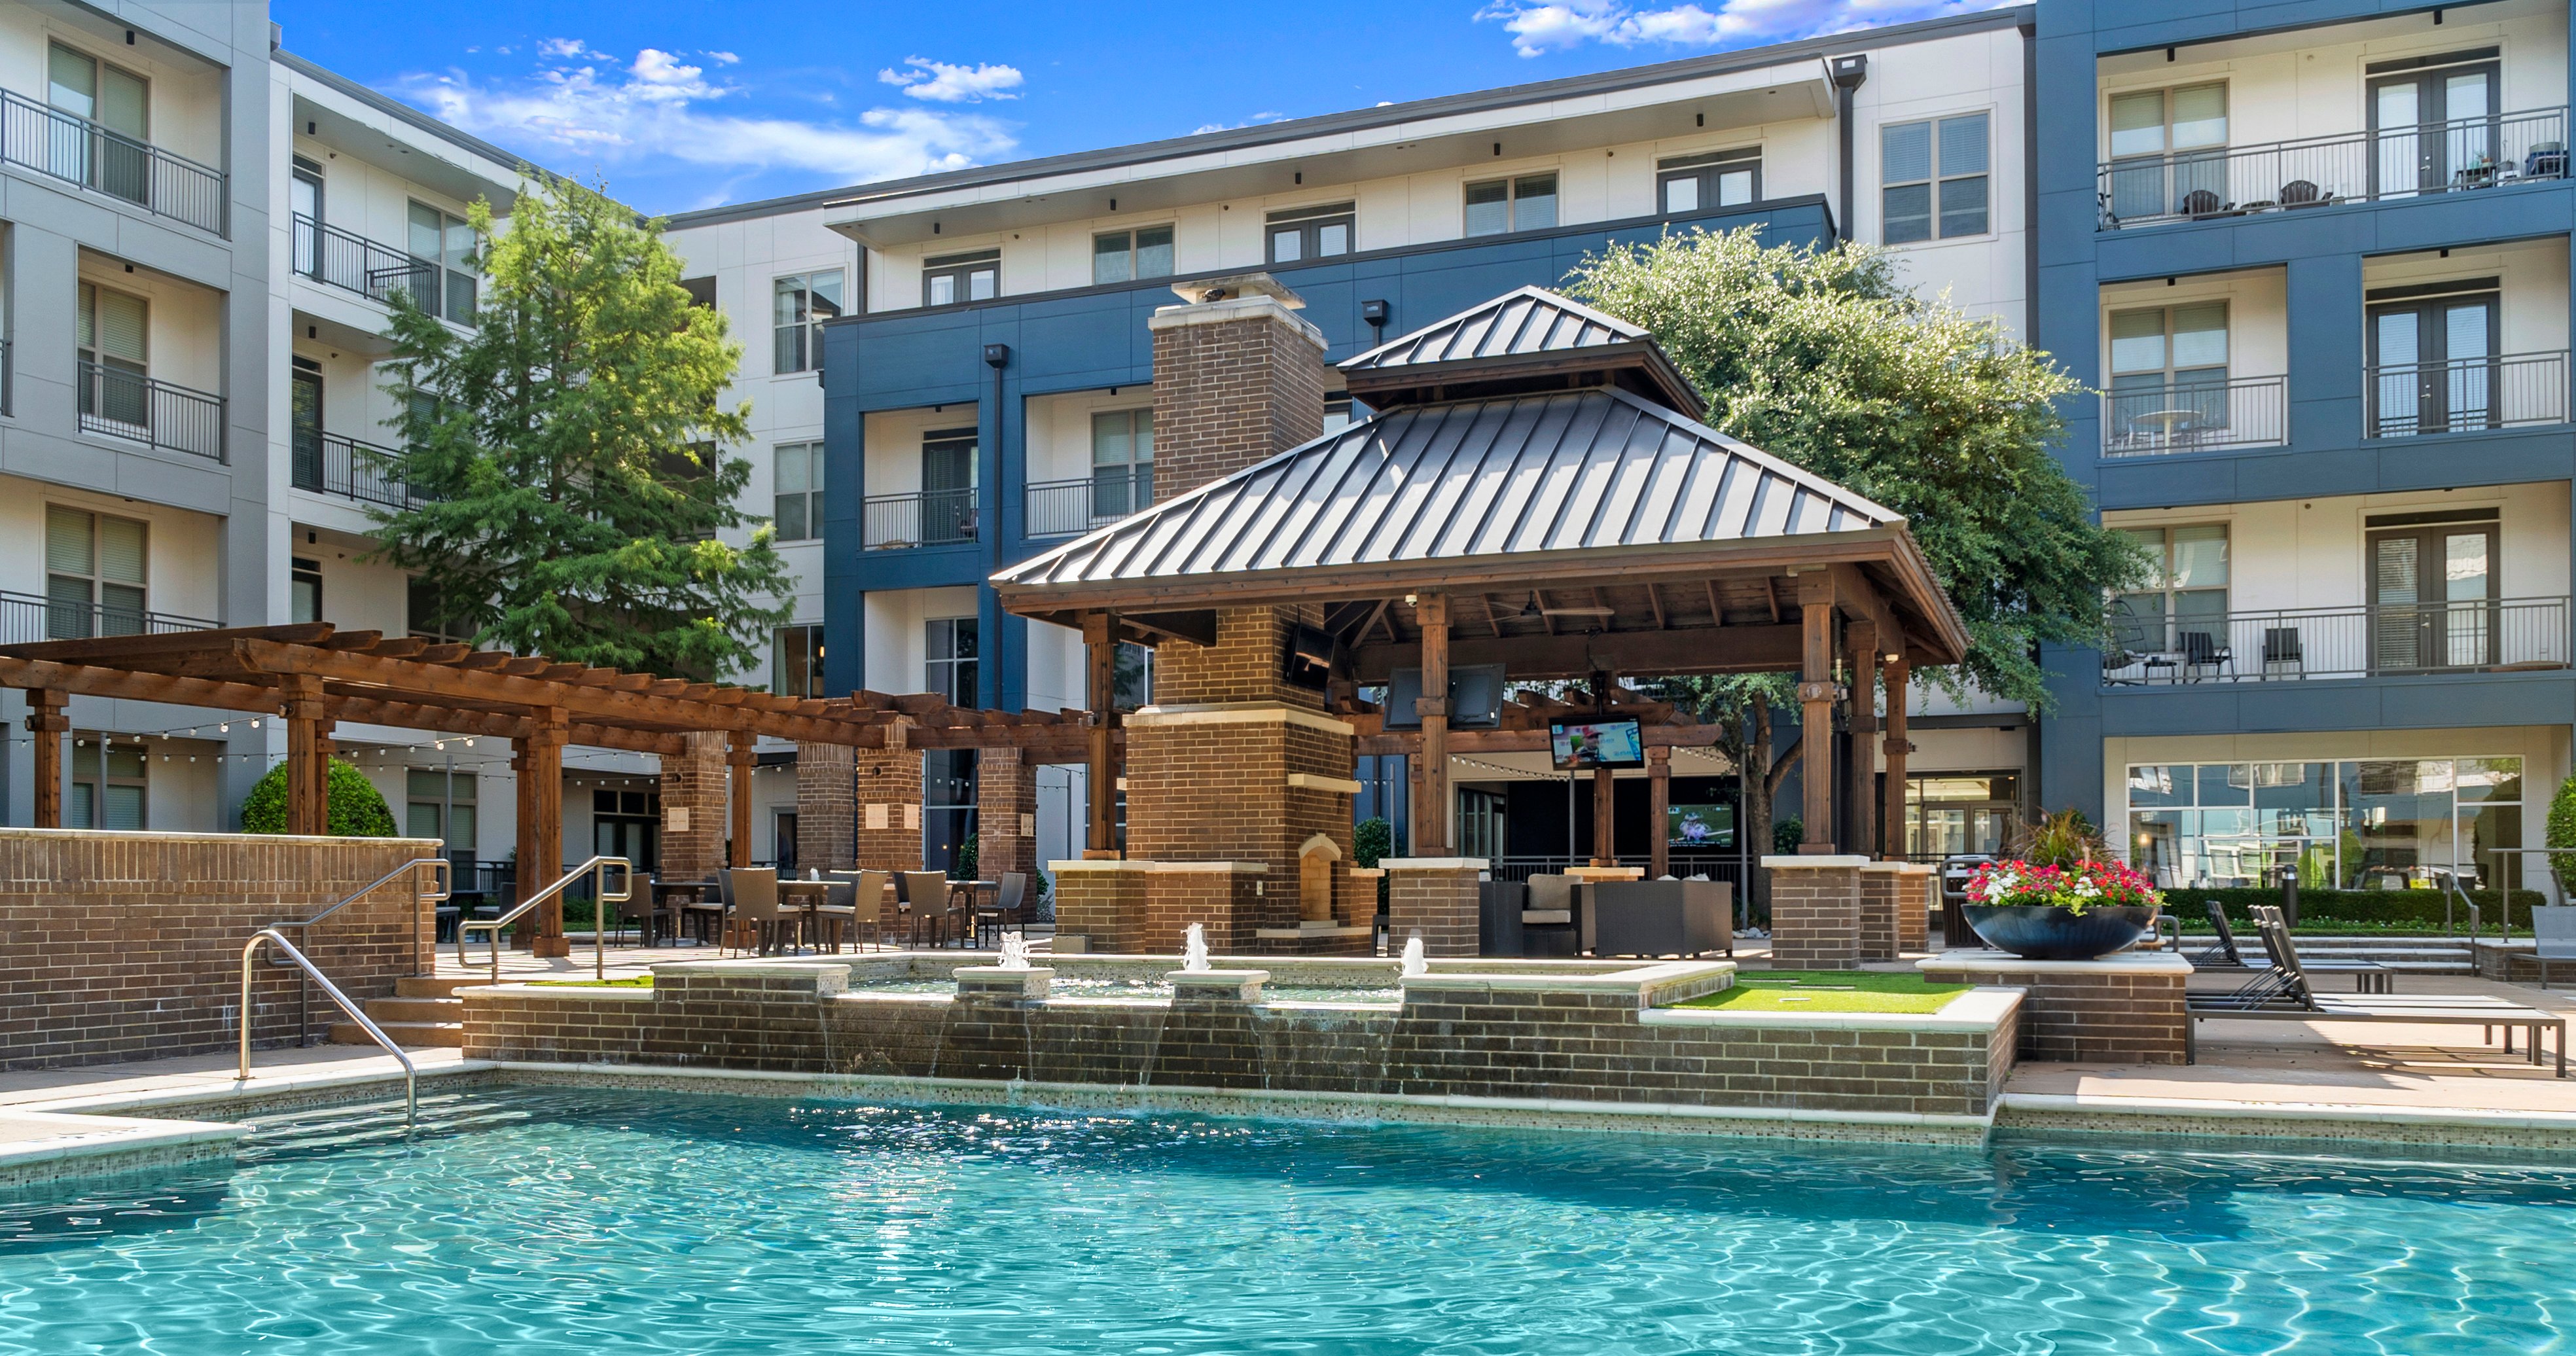 Strata Apartments Dallas Texas - swimming pool